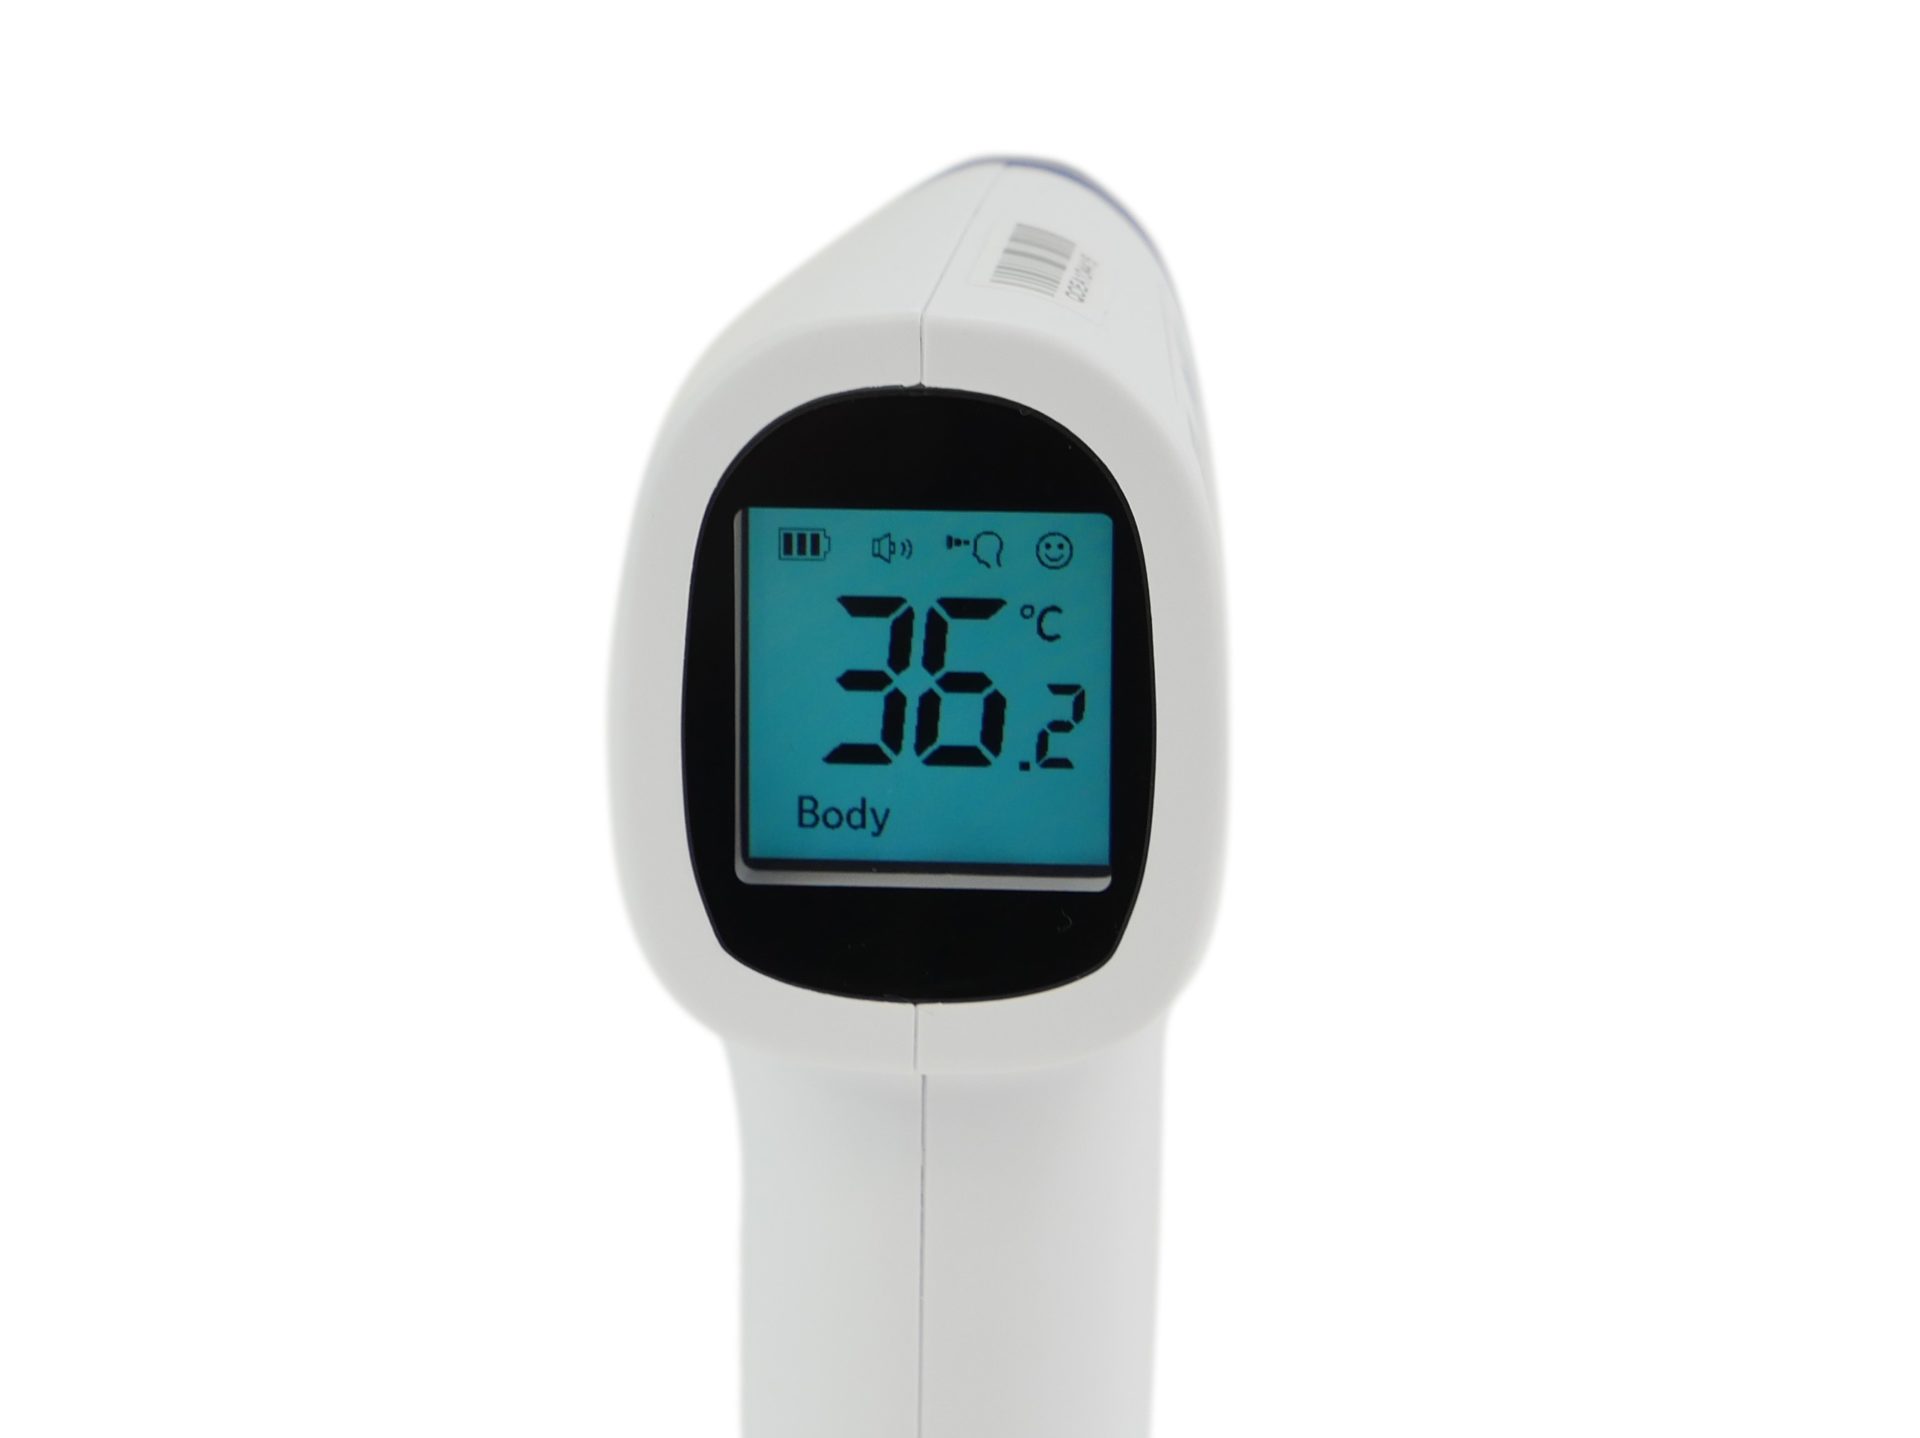 Thermomètre infrarouge sans contact Tempo Easy Spengler - LD Medical